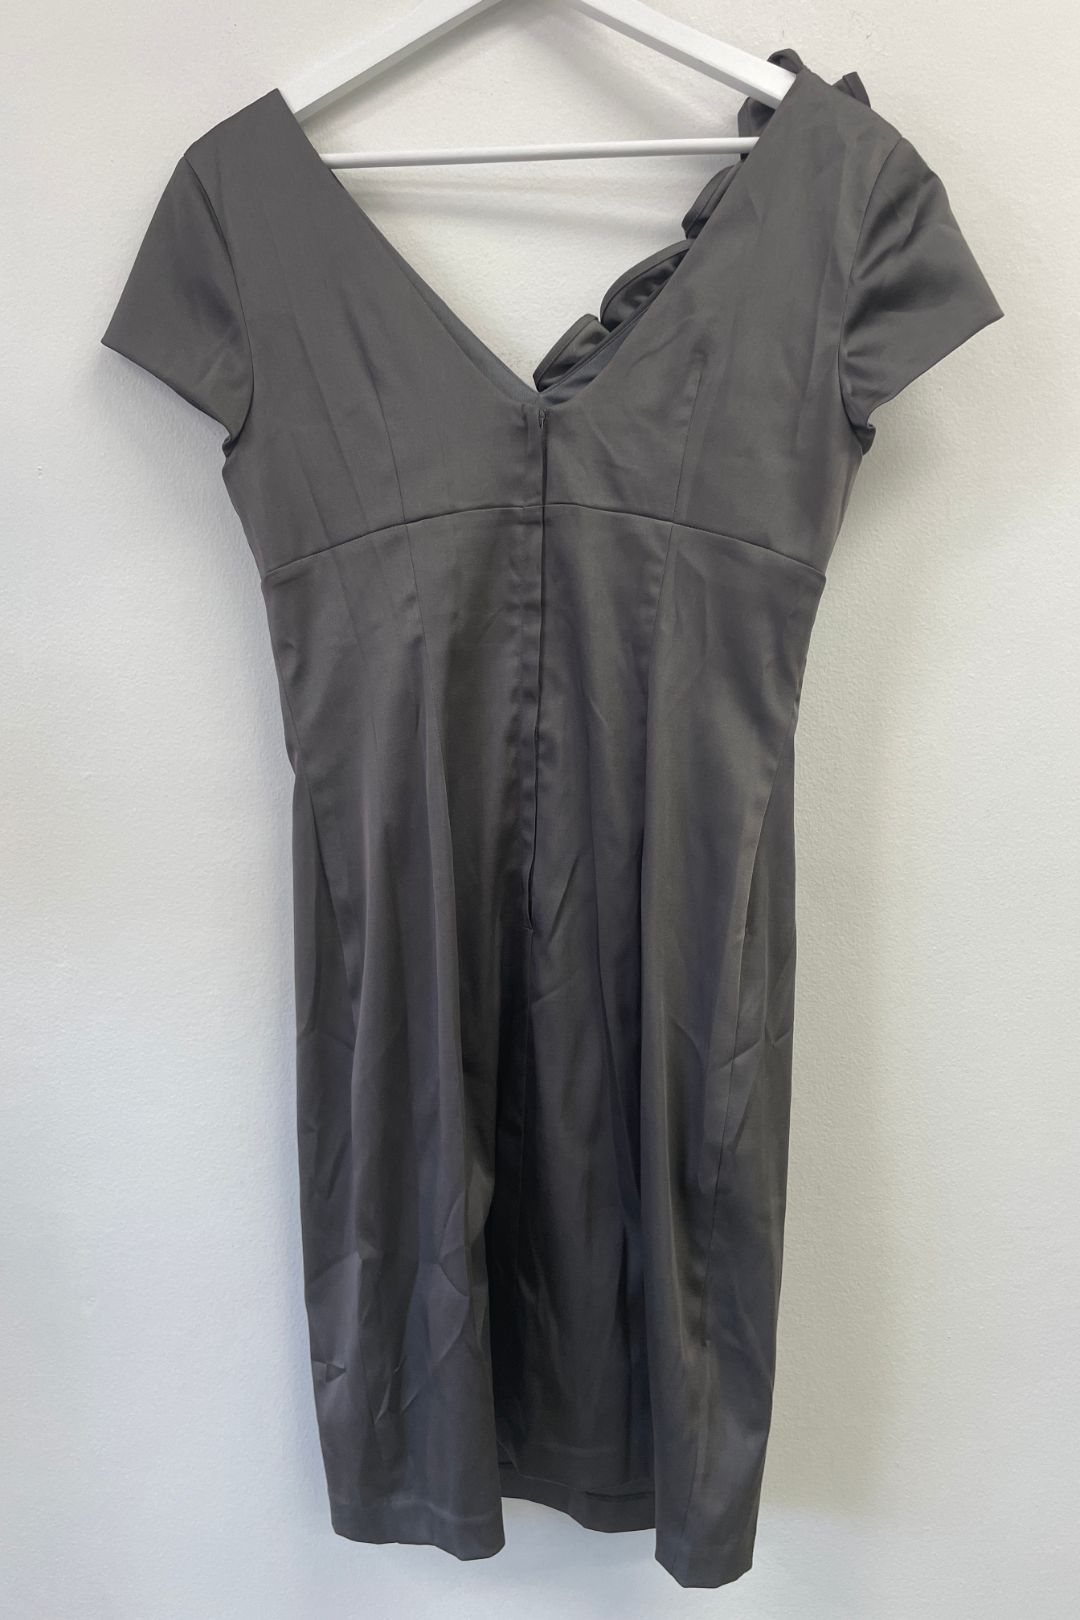 Montique - Ruffle Bodice Grey Short Dress